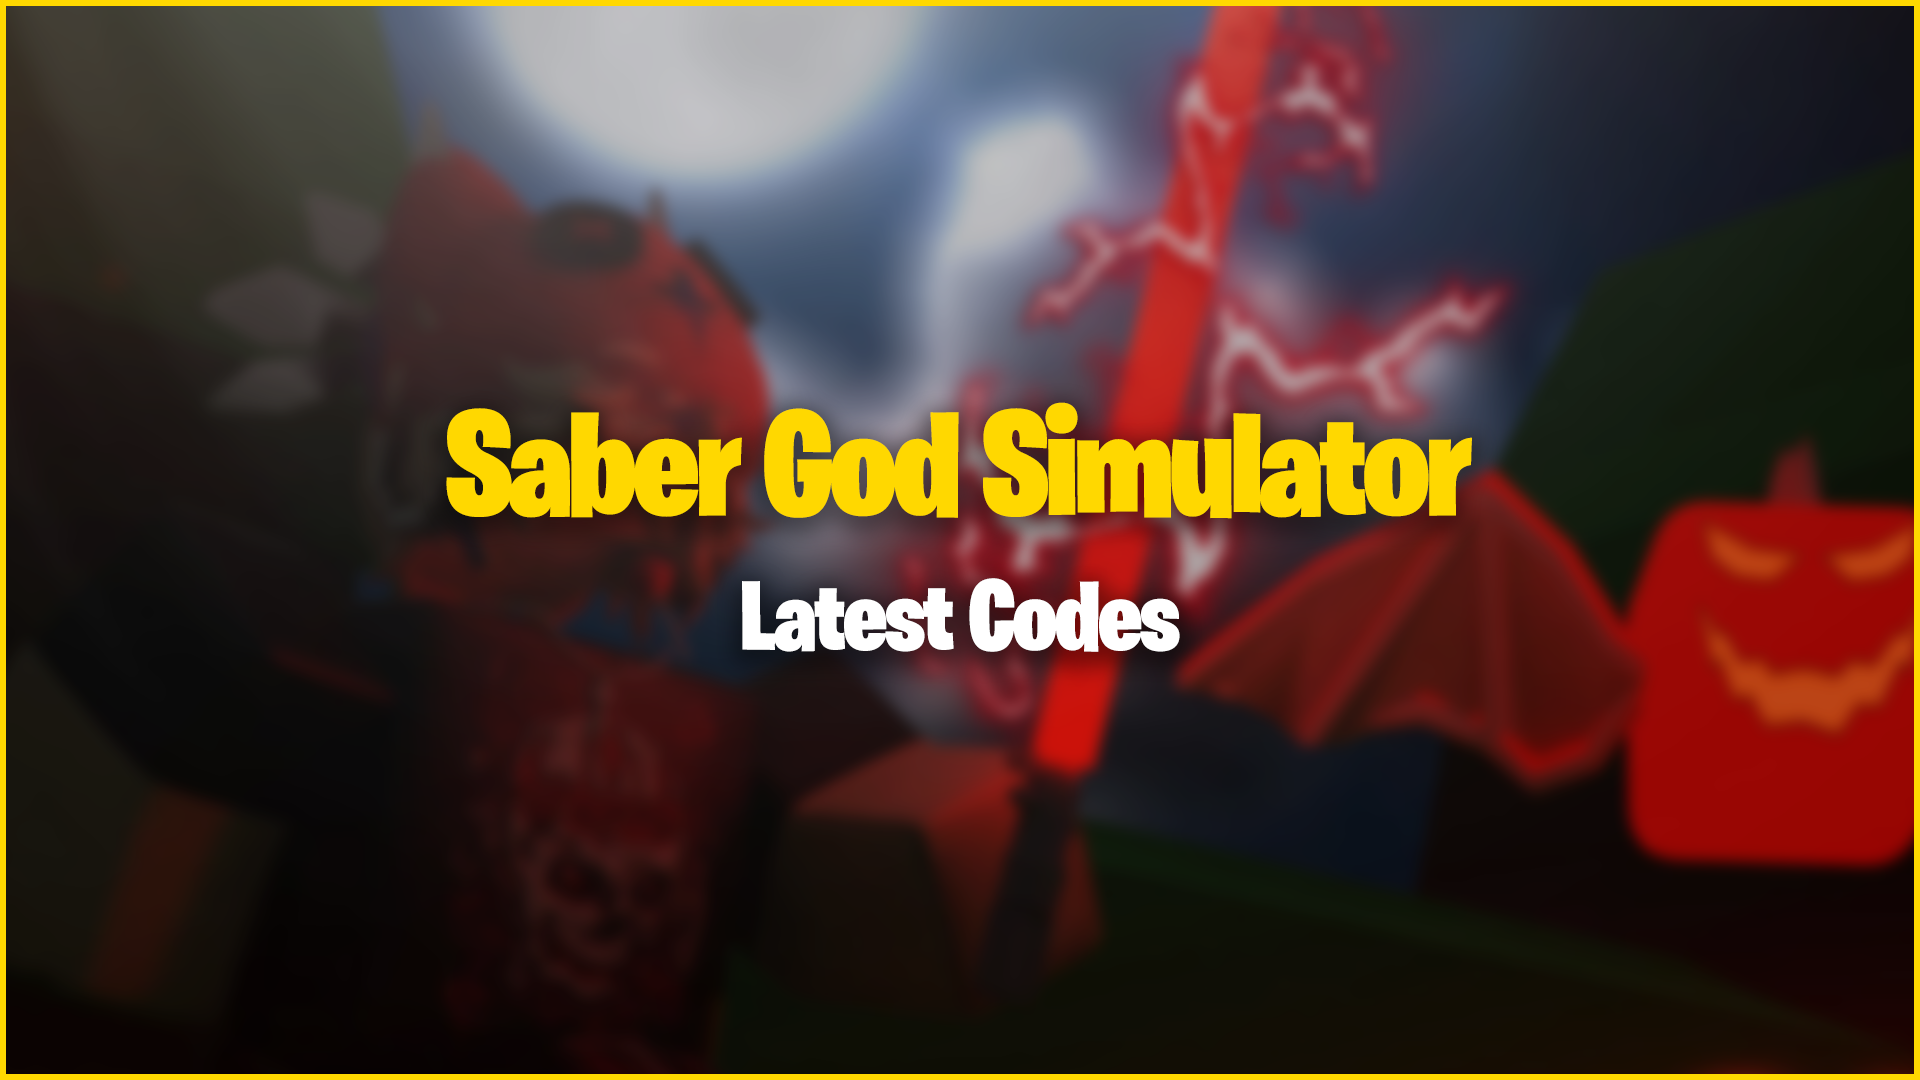 Codes du simulateur Saber God